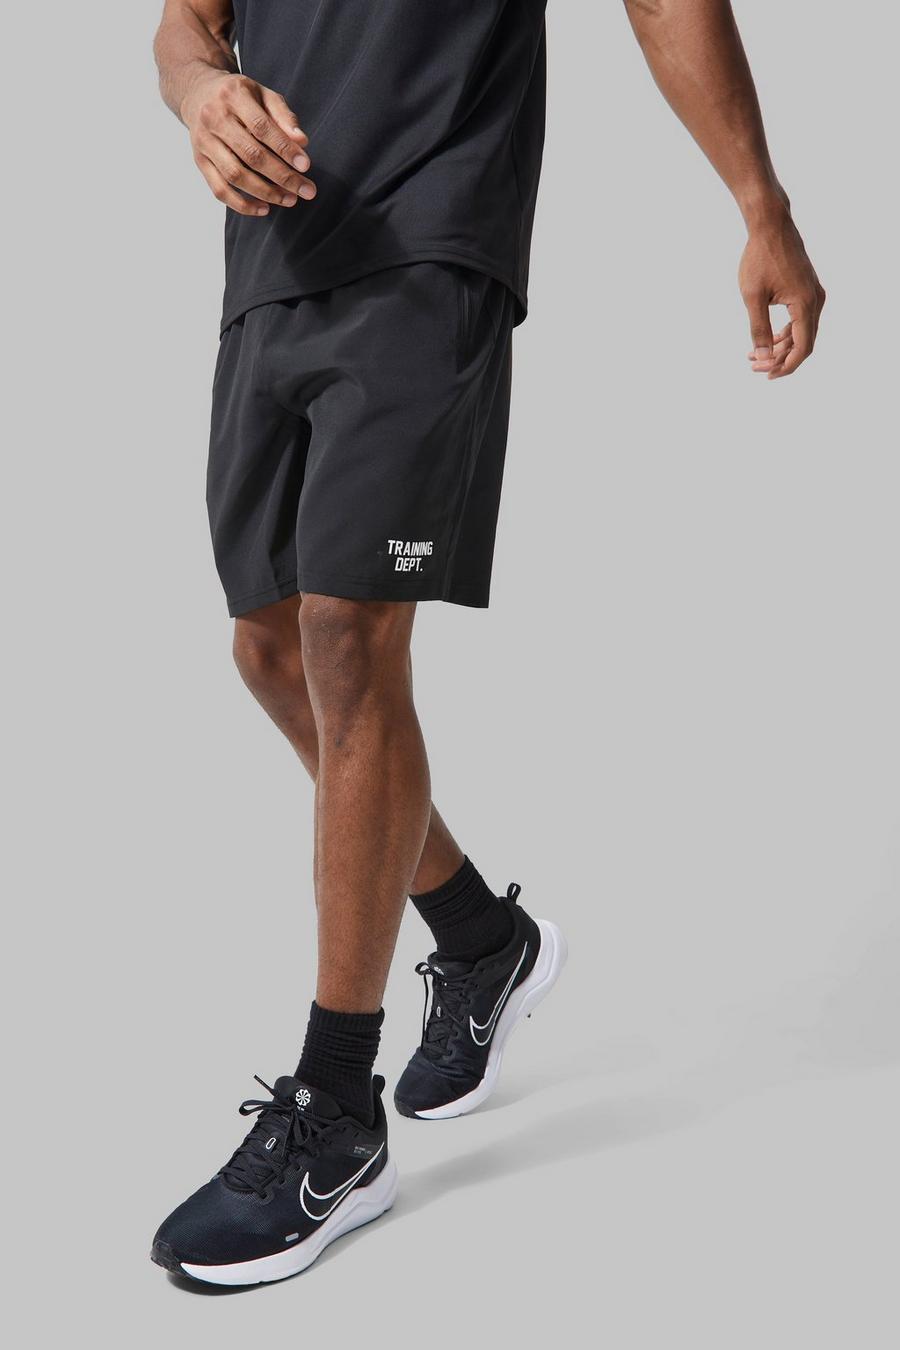 Pantalón corto MAN Active resistente Training Dept, Black negro